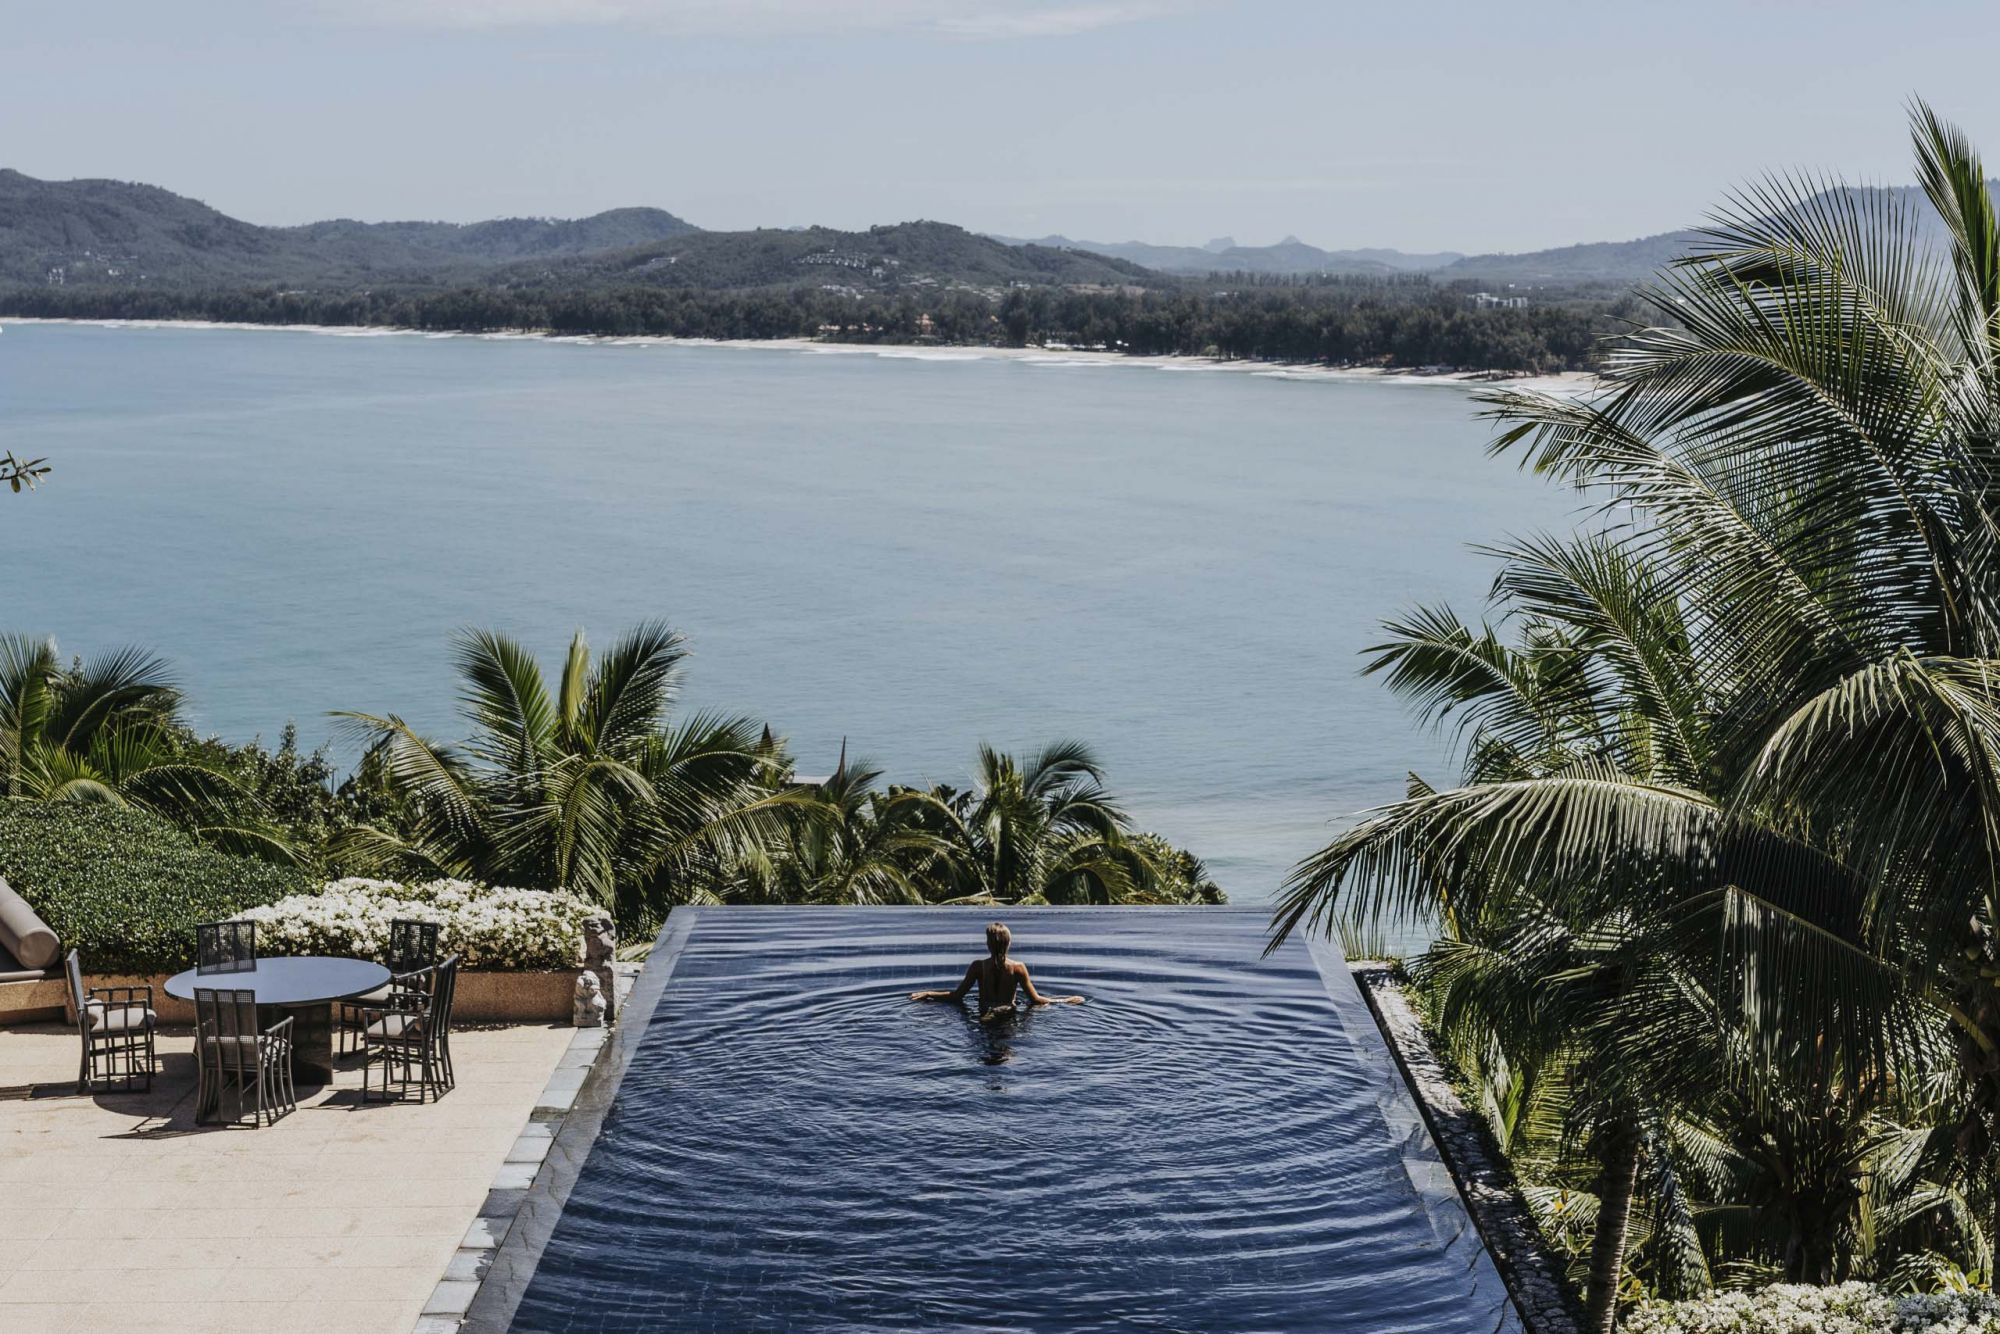 Amanpuri, Thailand - Accommodation, Villa 46, 5-Bedroom Ocean Villa, Pool, View